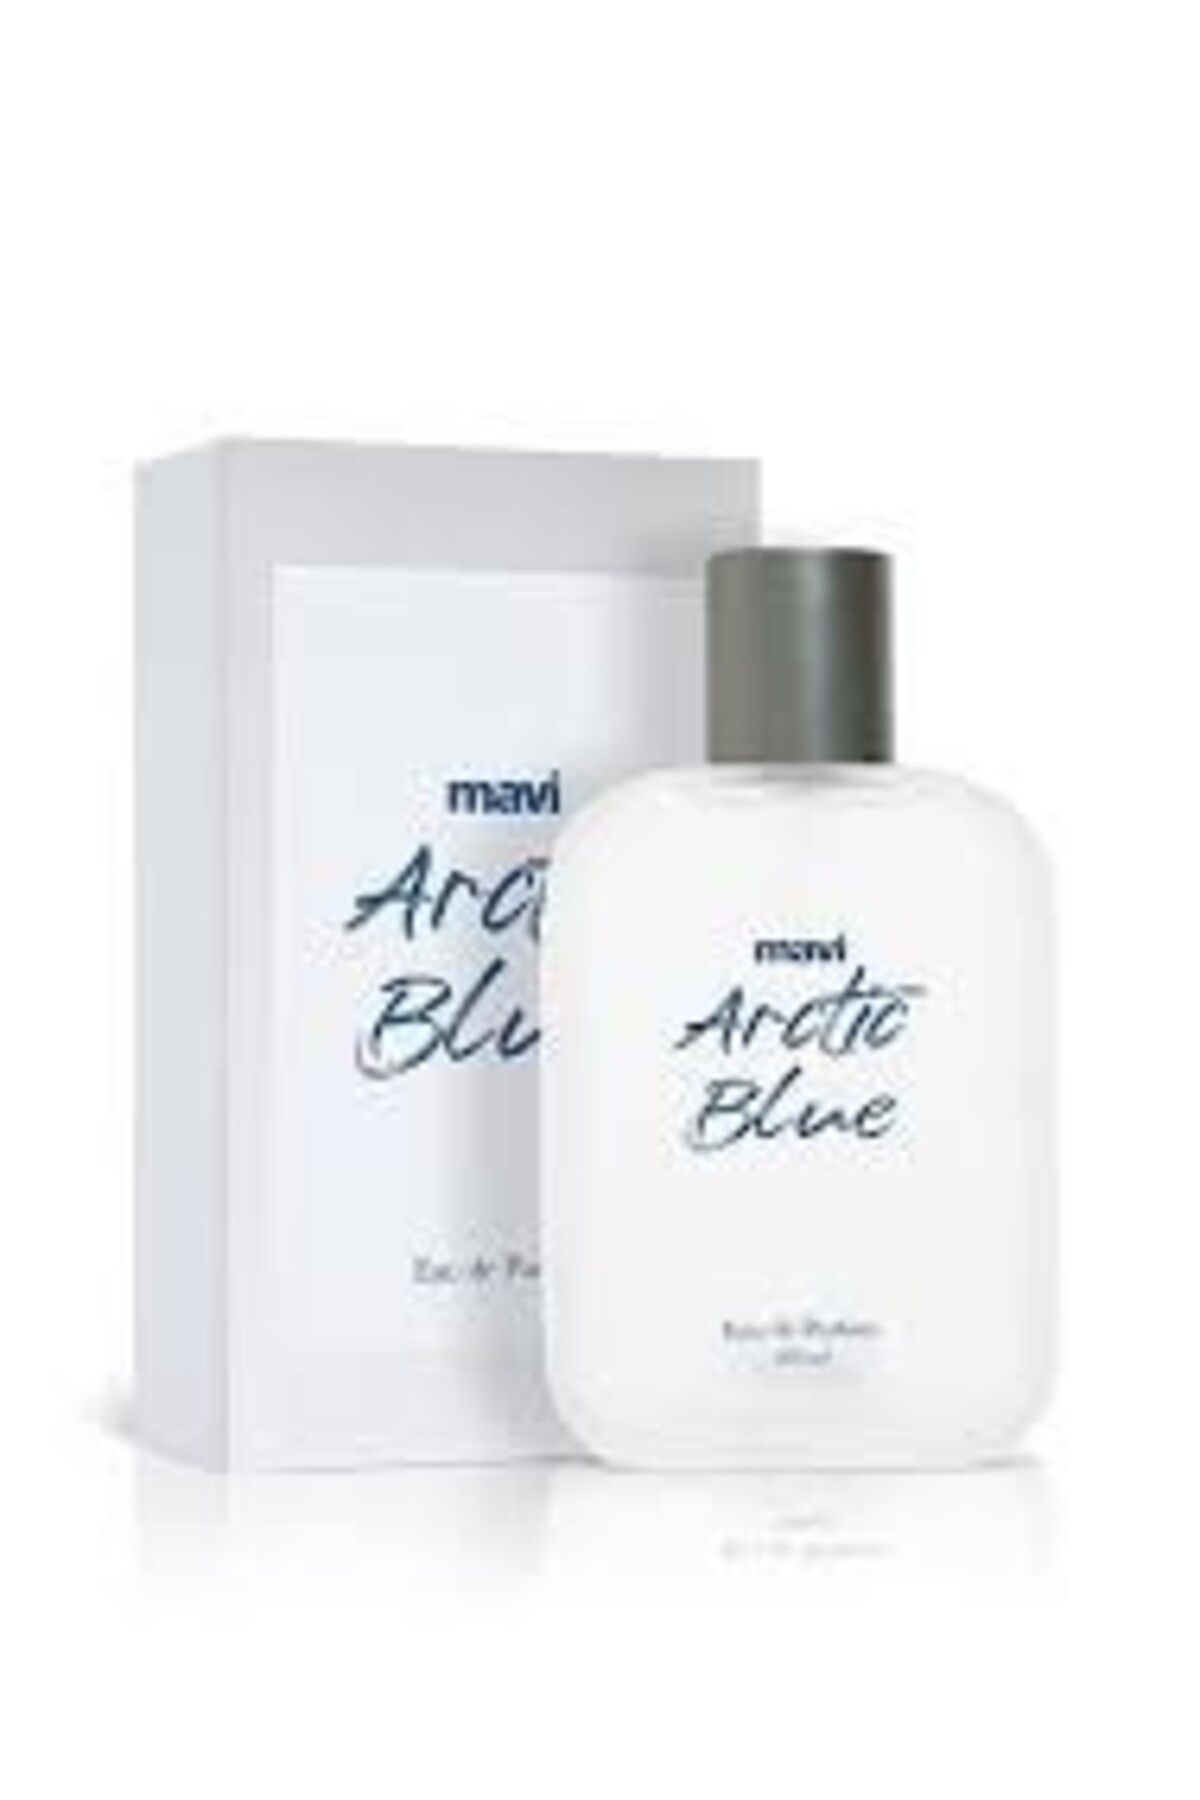 Mavi Arctic Blue Erkek Parfüm